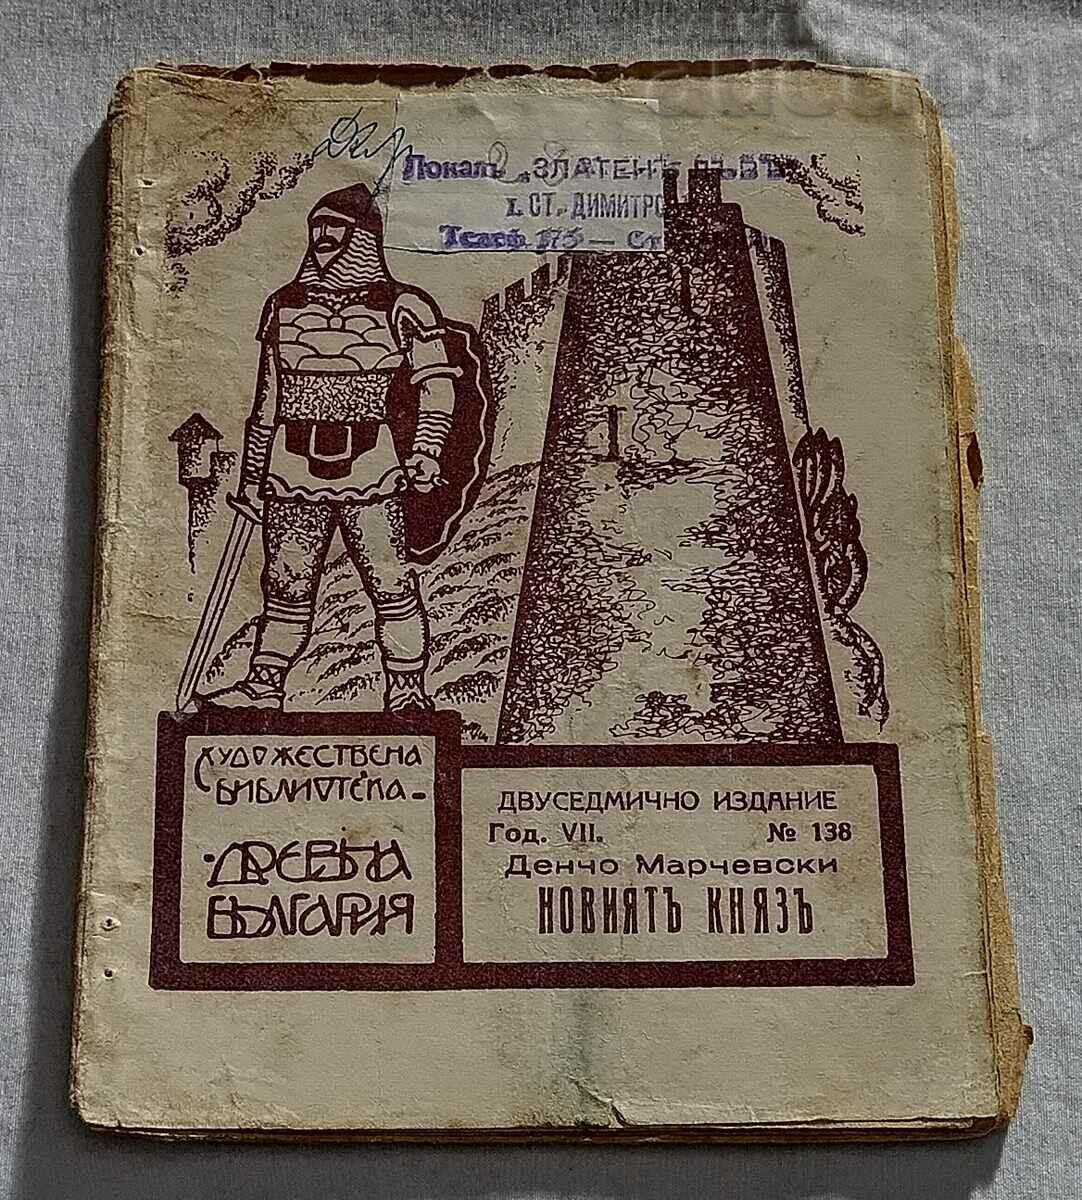 THE NEW PRINCE D. MARCHEVSKI BIBLE "ANCIENT BULGARIA" 1933